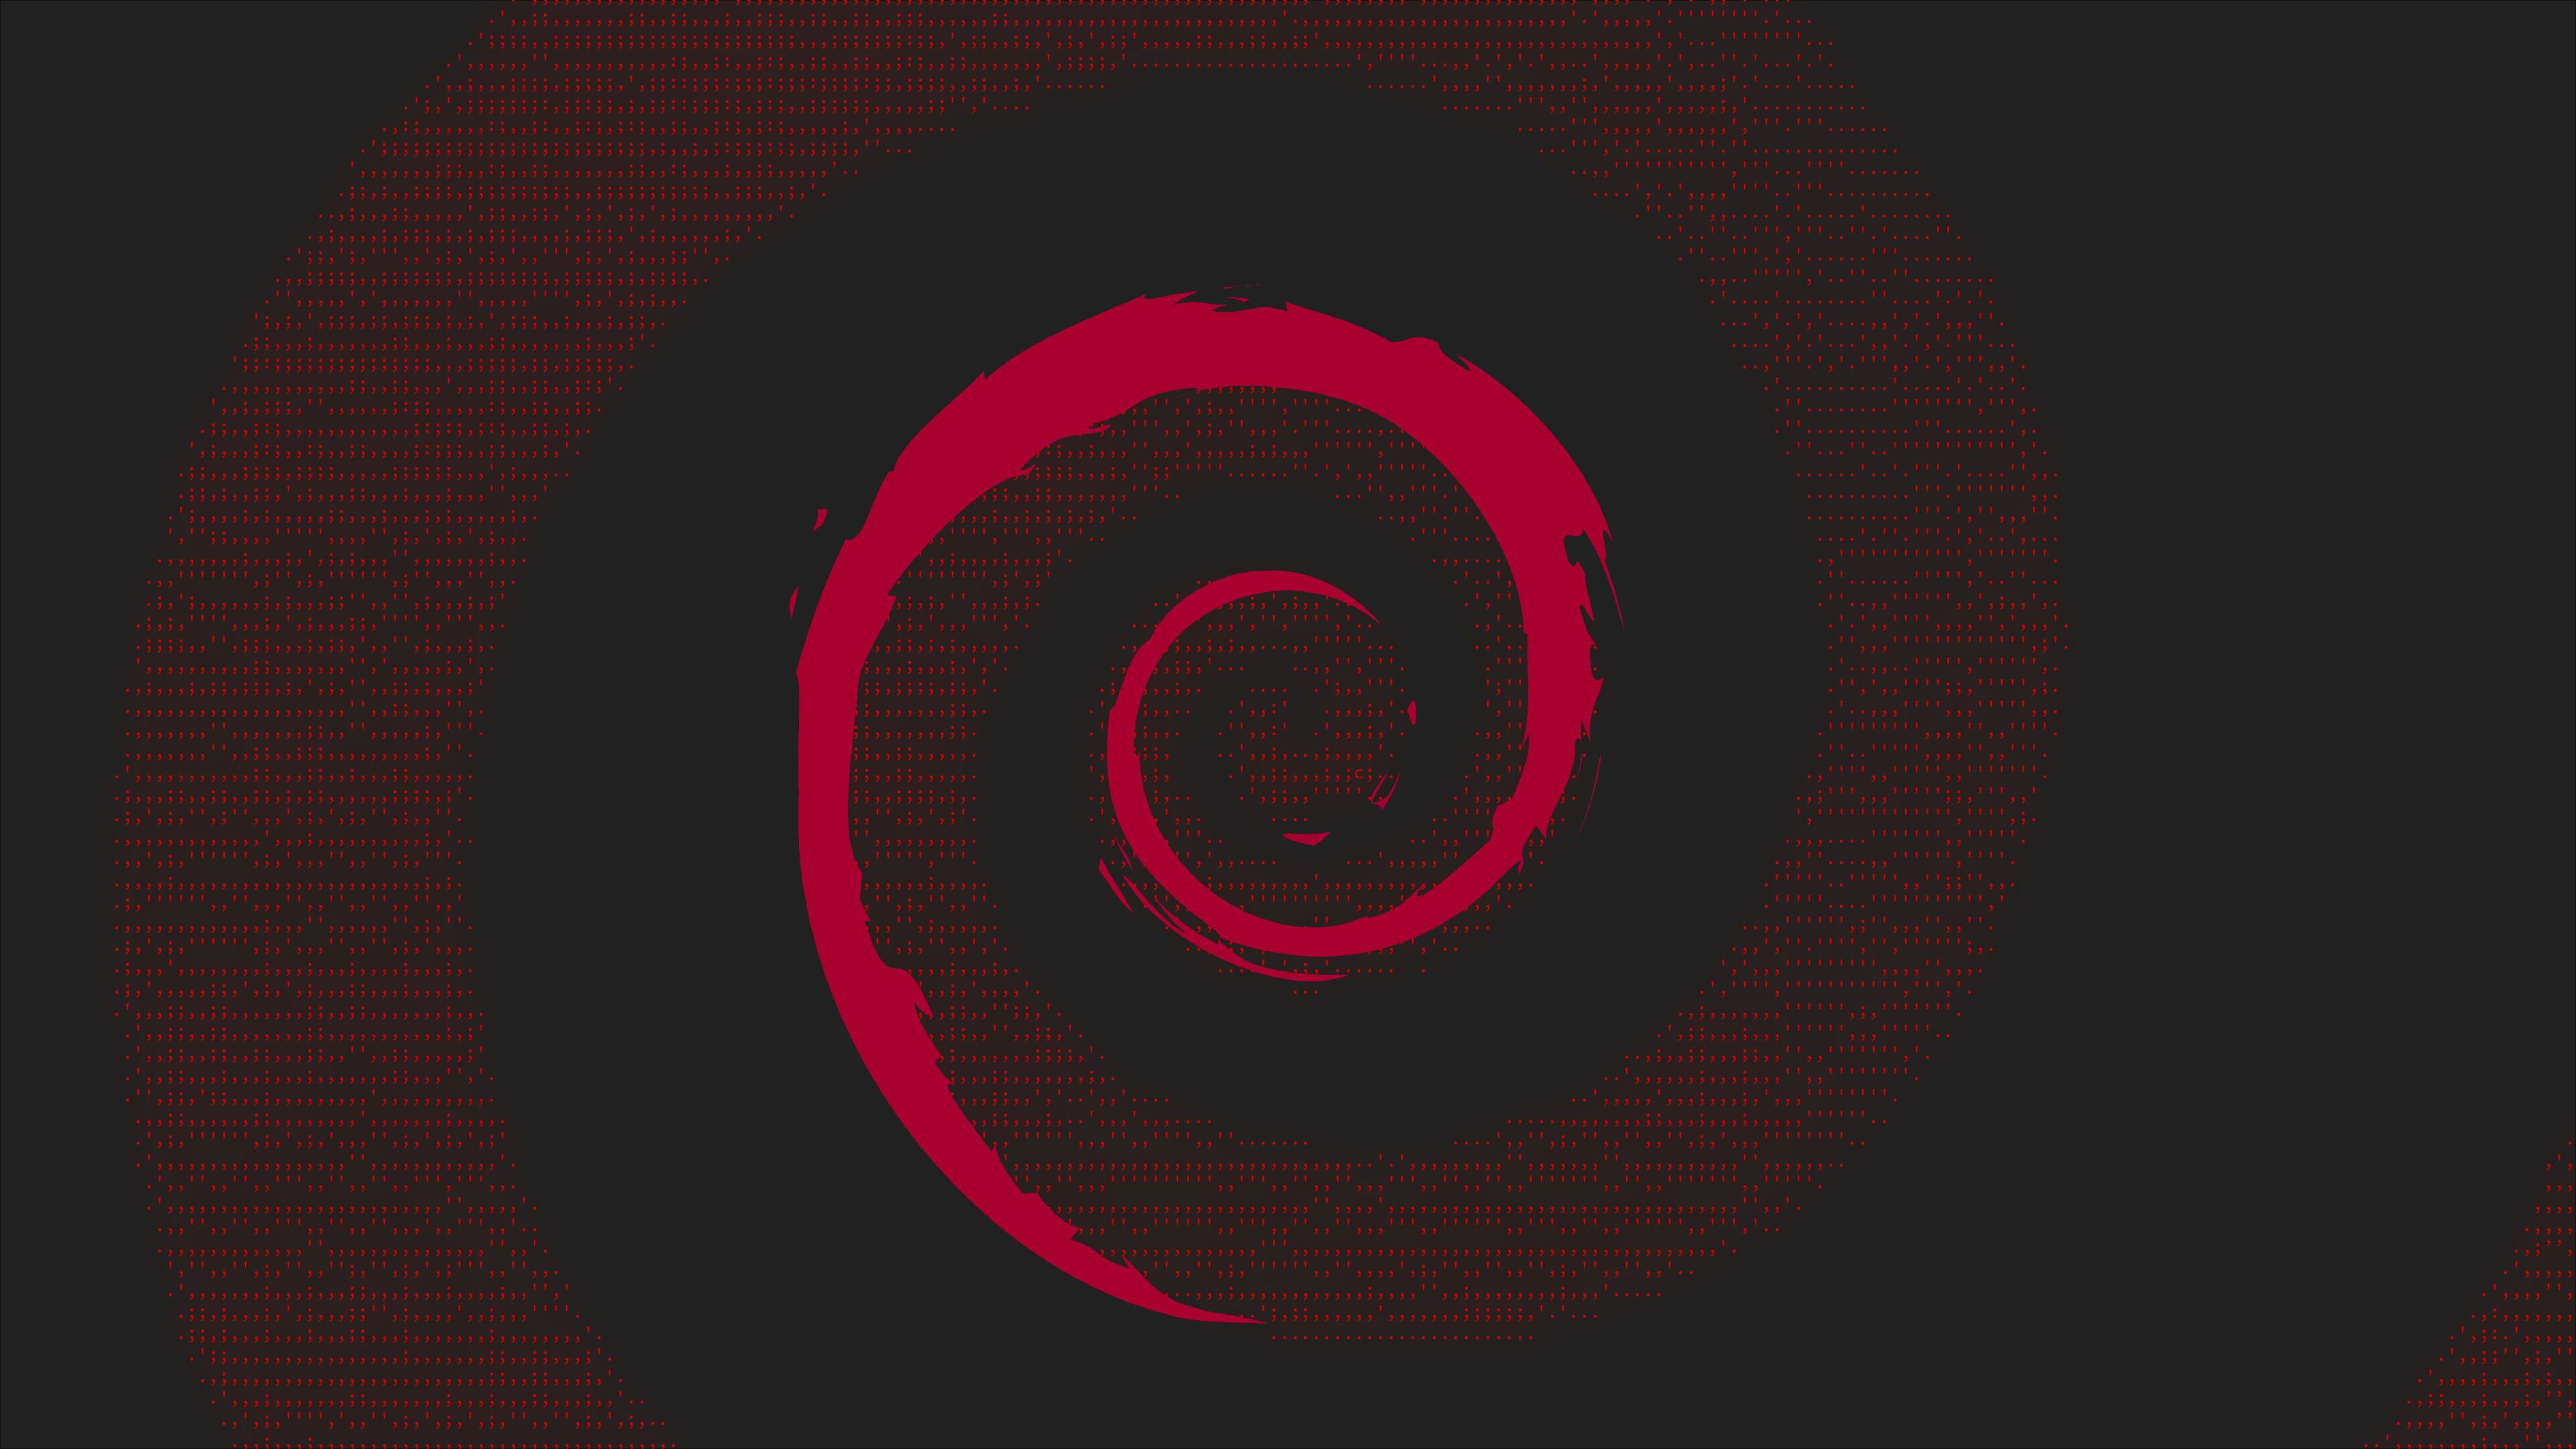 3840x2160 red and black swirl wallpaper, red coil graphic wallpaper #Debian #Linux #minimalism material minimal neon glow ASCII art&acirc;&#128;&brvbar; | Graphic wallpaper, Ascii art, Wallpaper